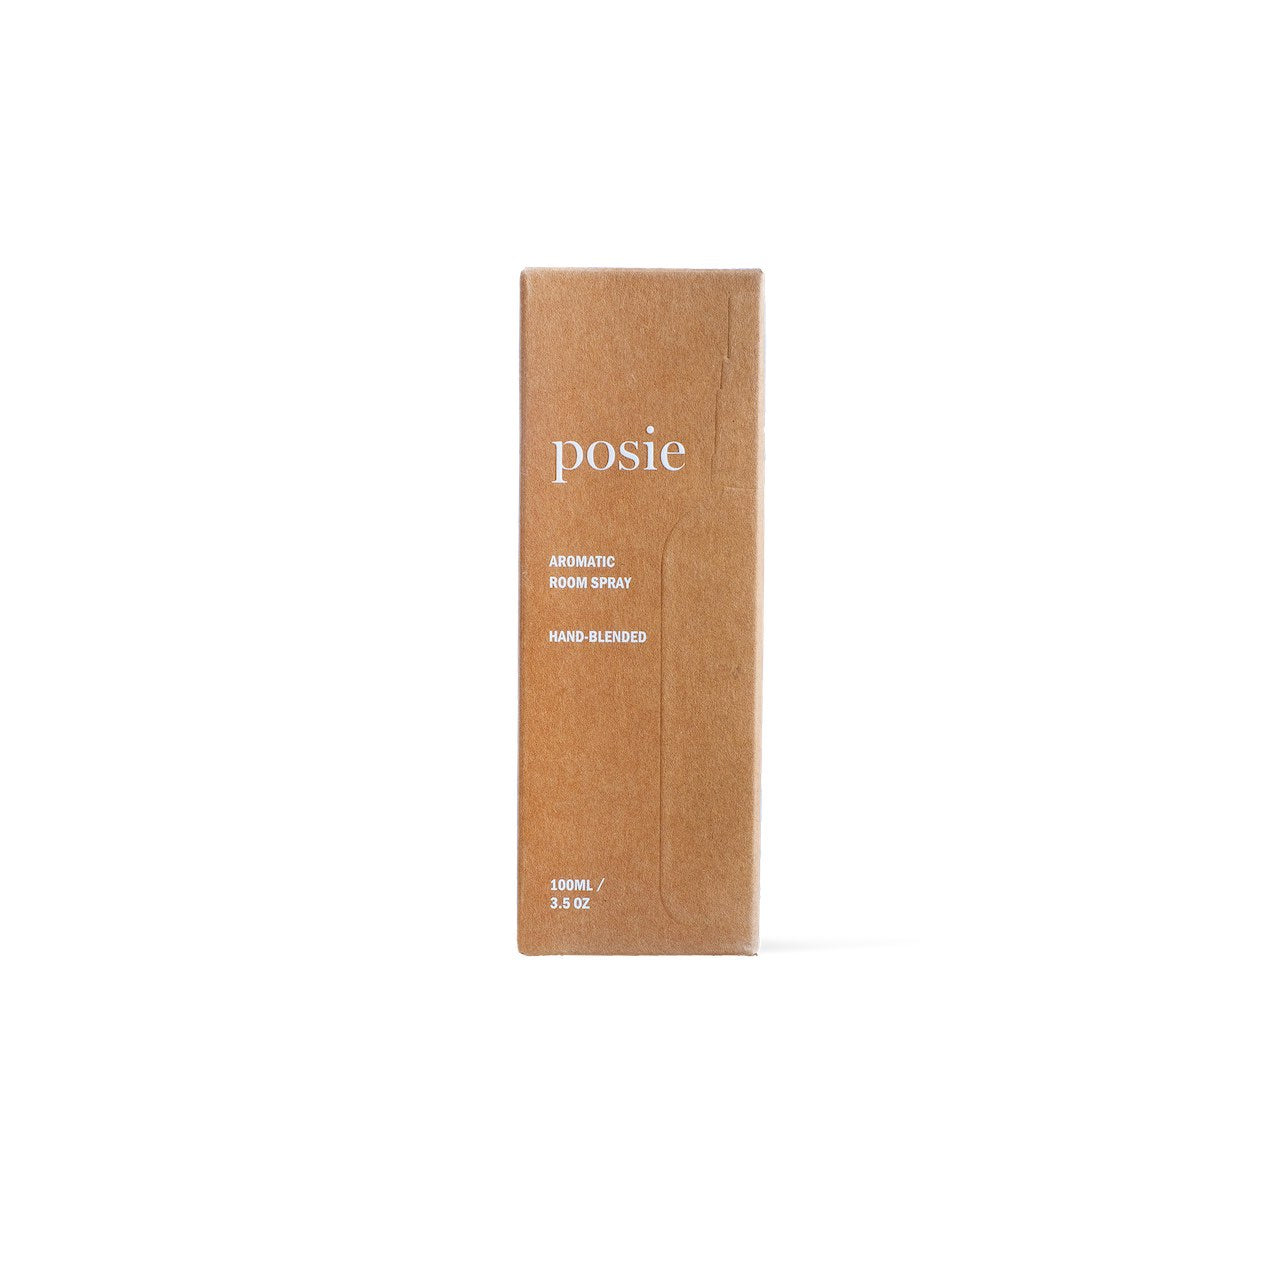 Posie Aromatic Room Spray - PIP 100ml